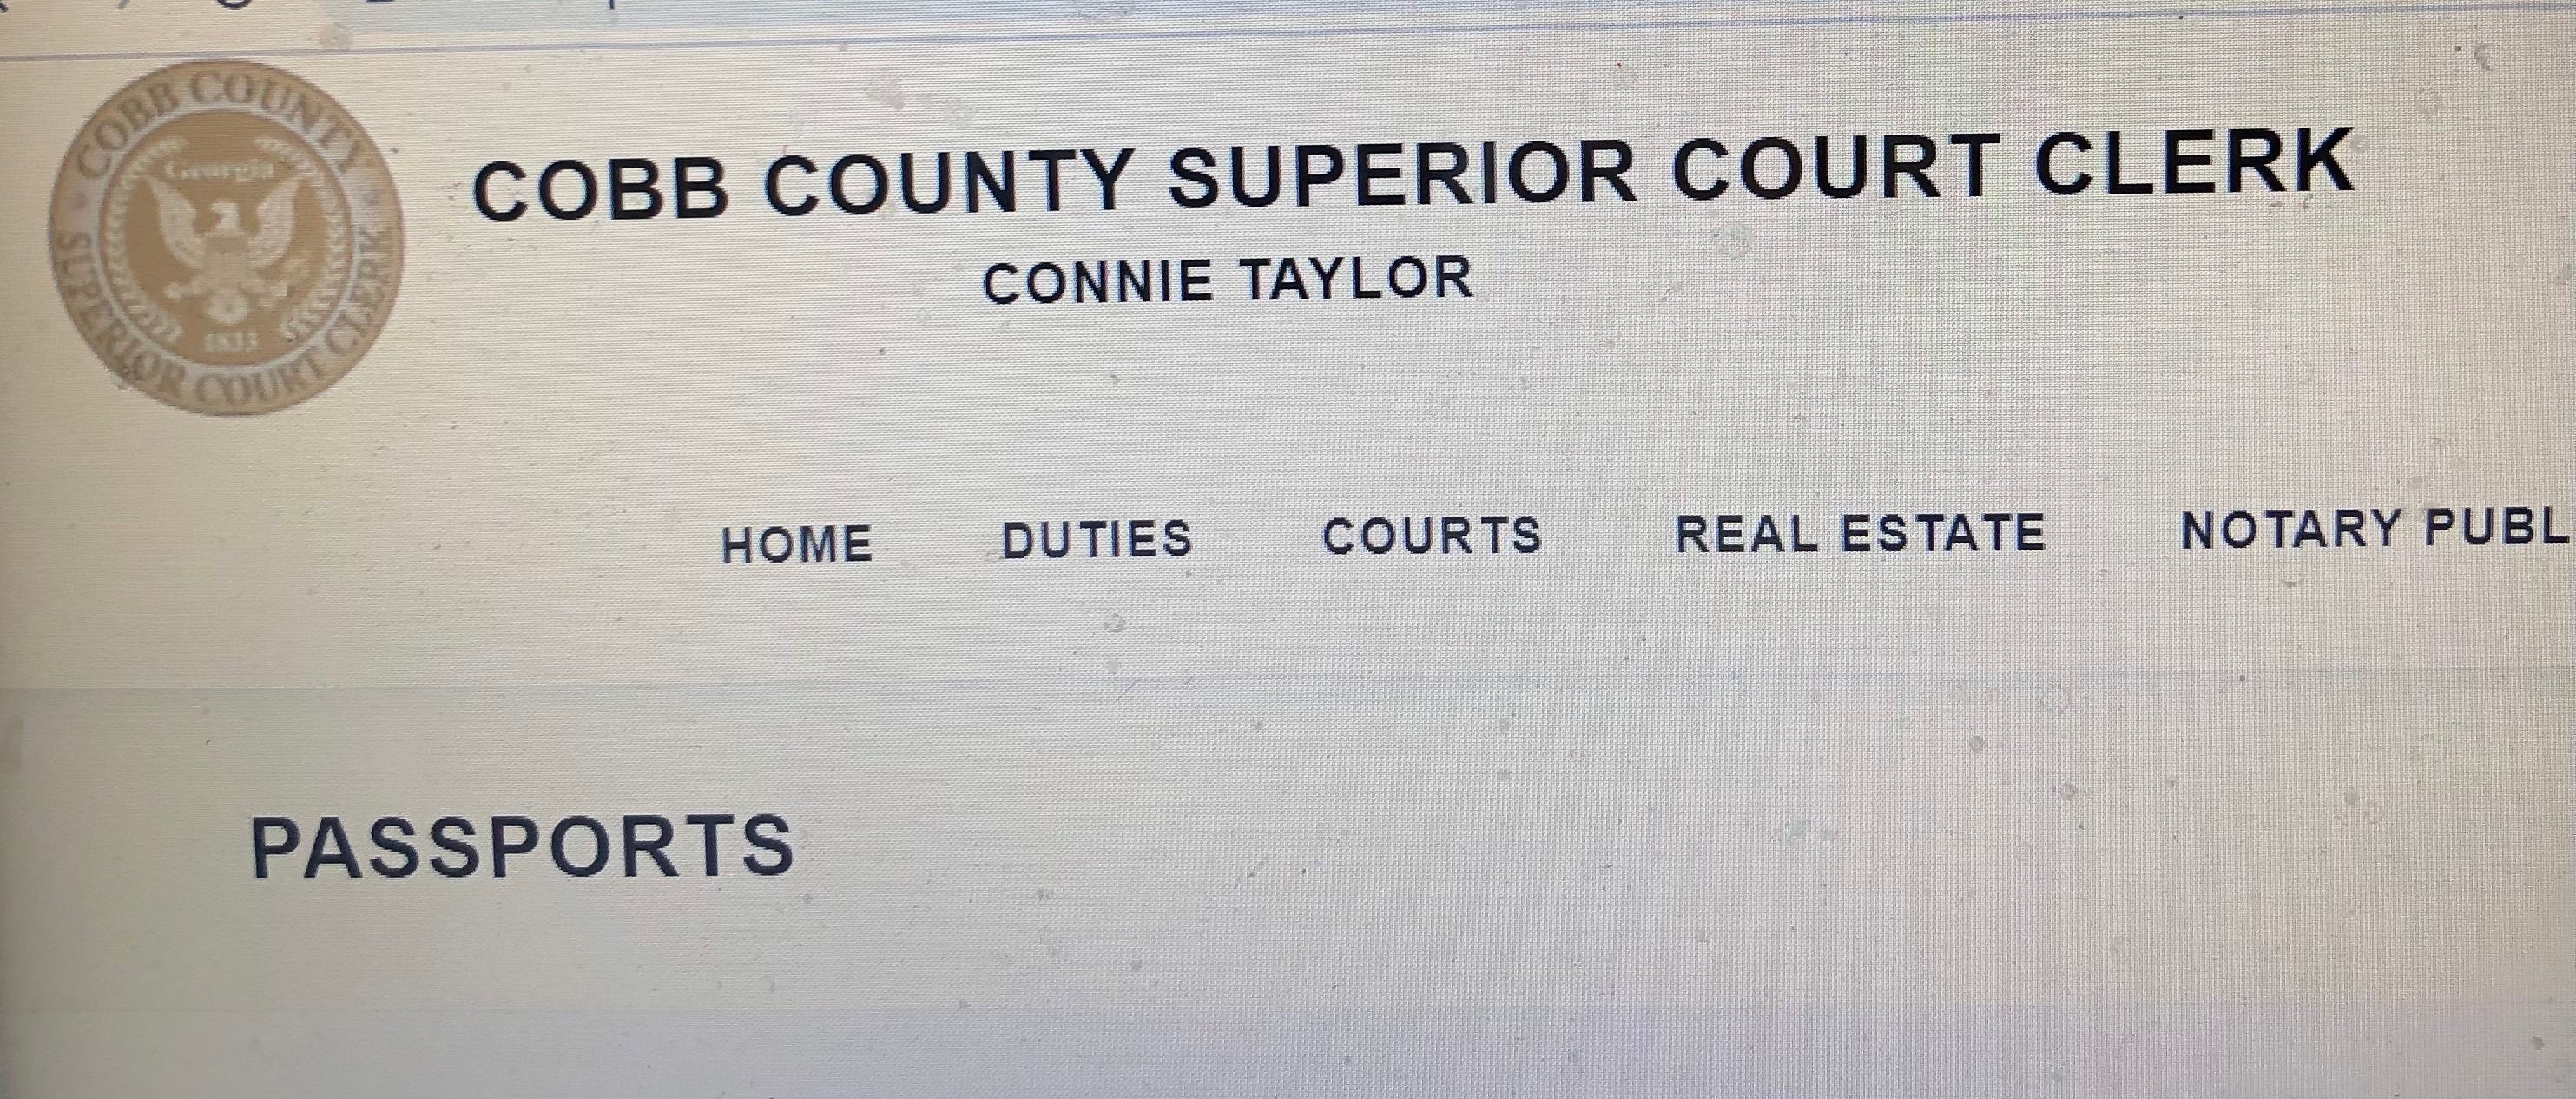 Up Next: More Progress Cobb County Superior Court Clerk Connie Taylor